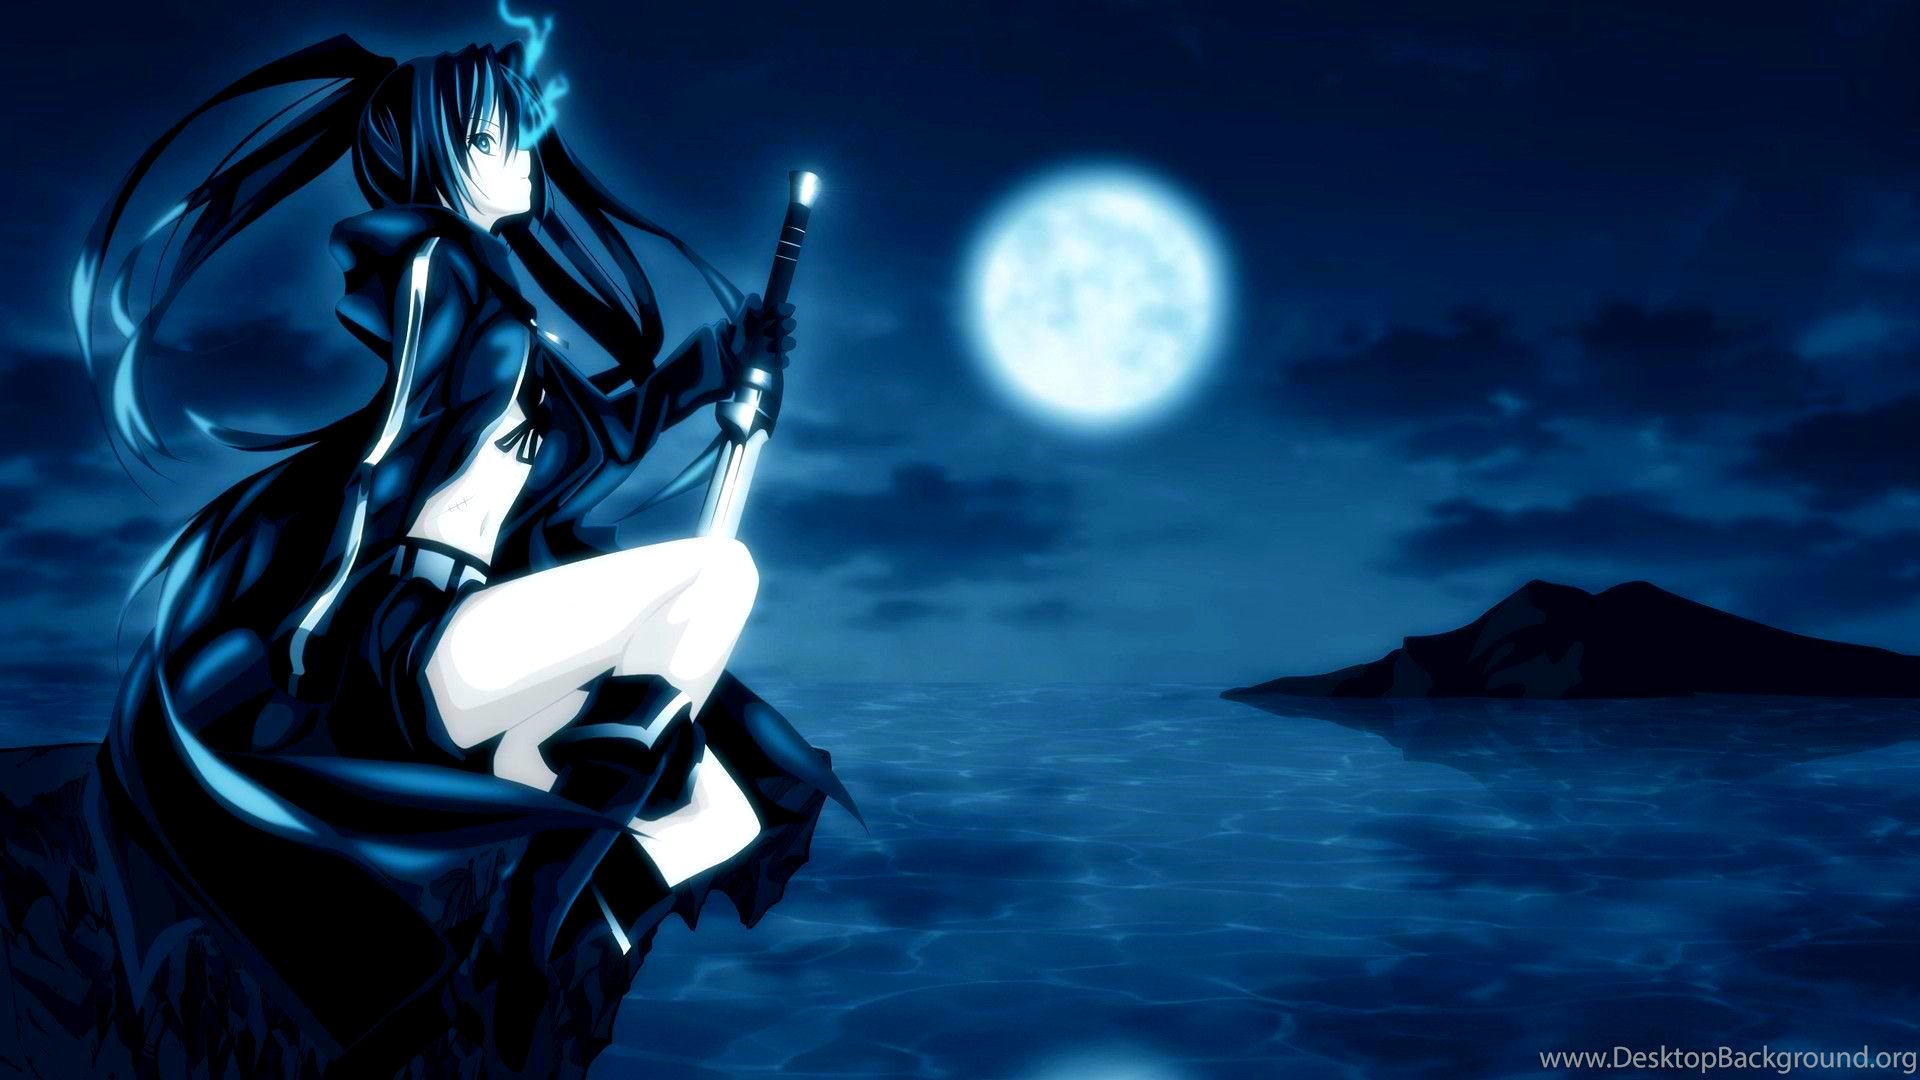 Mysterious anime girl wielding a katana in a hauntingly beautiful HD desktop wallpaper.